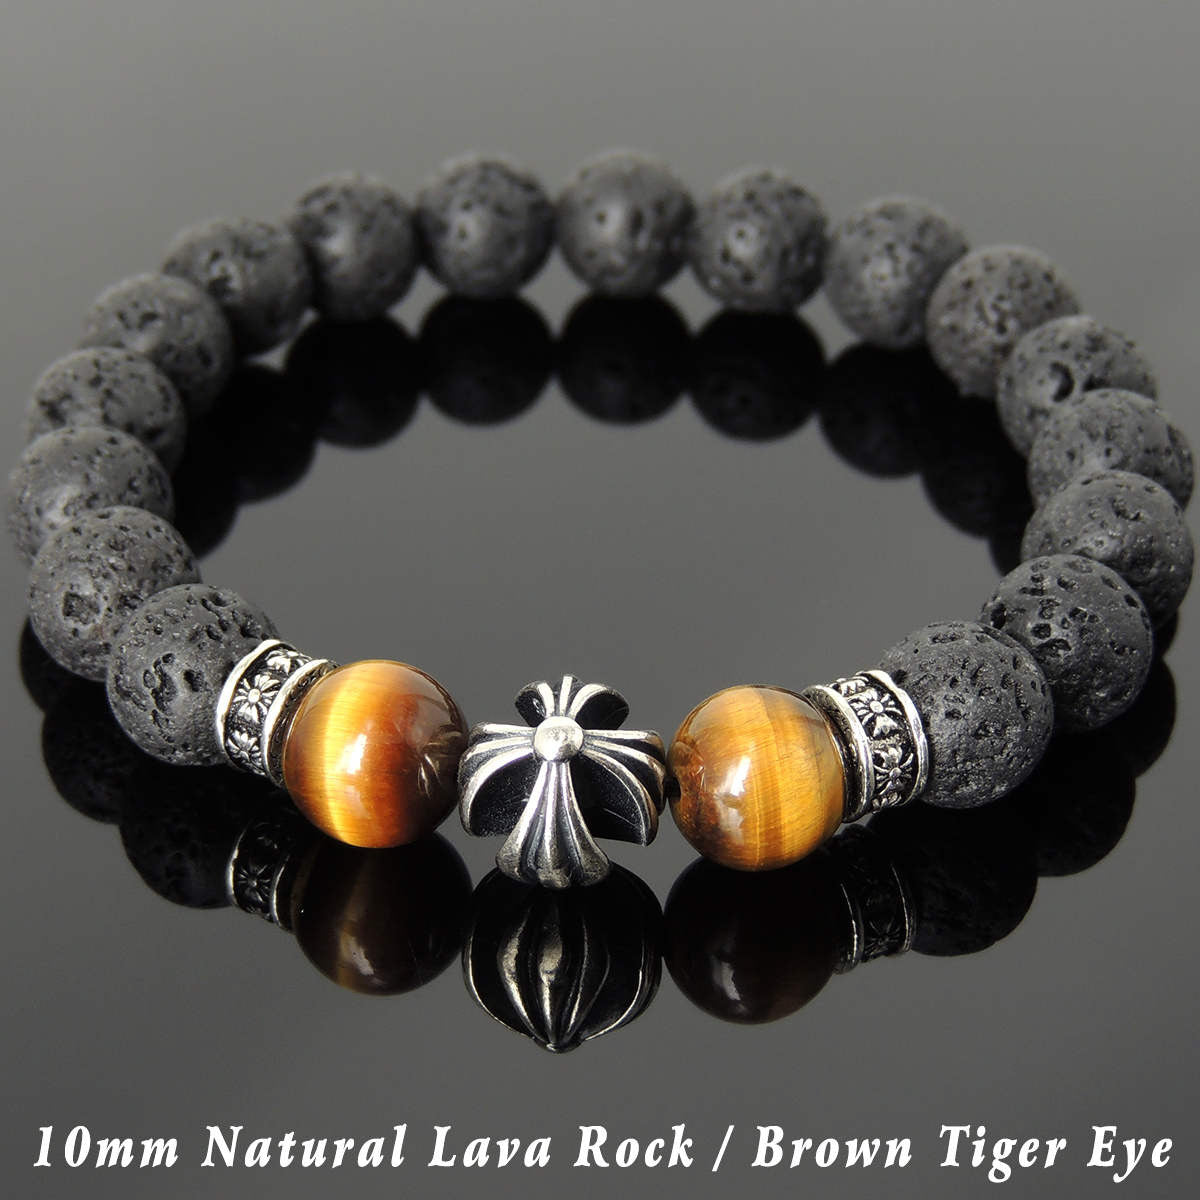 10mm Brown Tiger Eye & Lava Rock Healing Gemstone Bracelet with S925 Sterling Silver Cross & Spacer Beads - Handmade by Gem & Silver BR1102